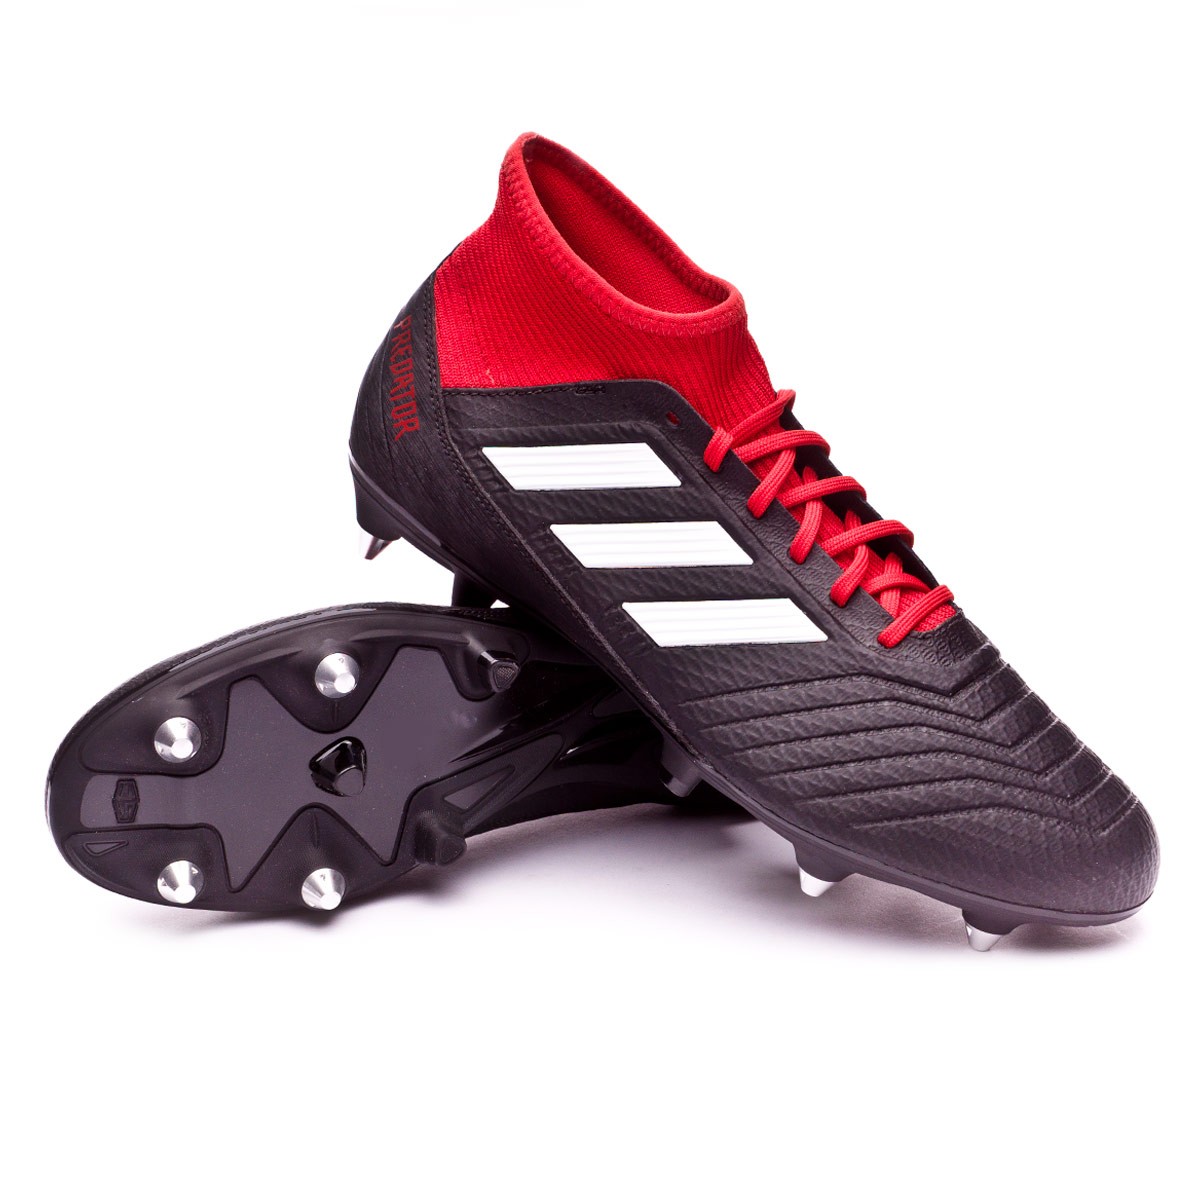 predator football boots 18.3